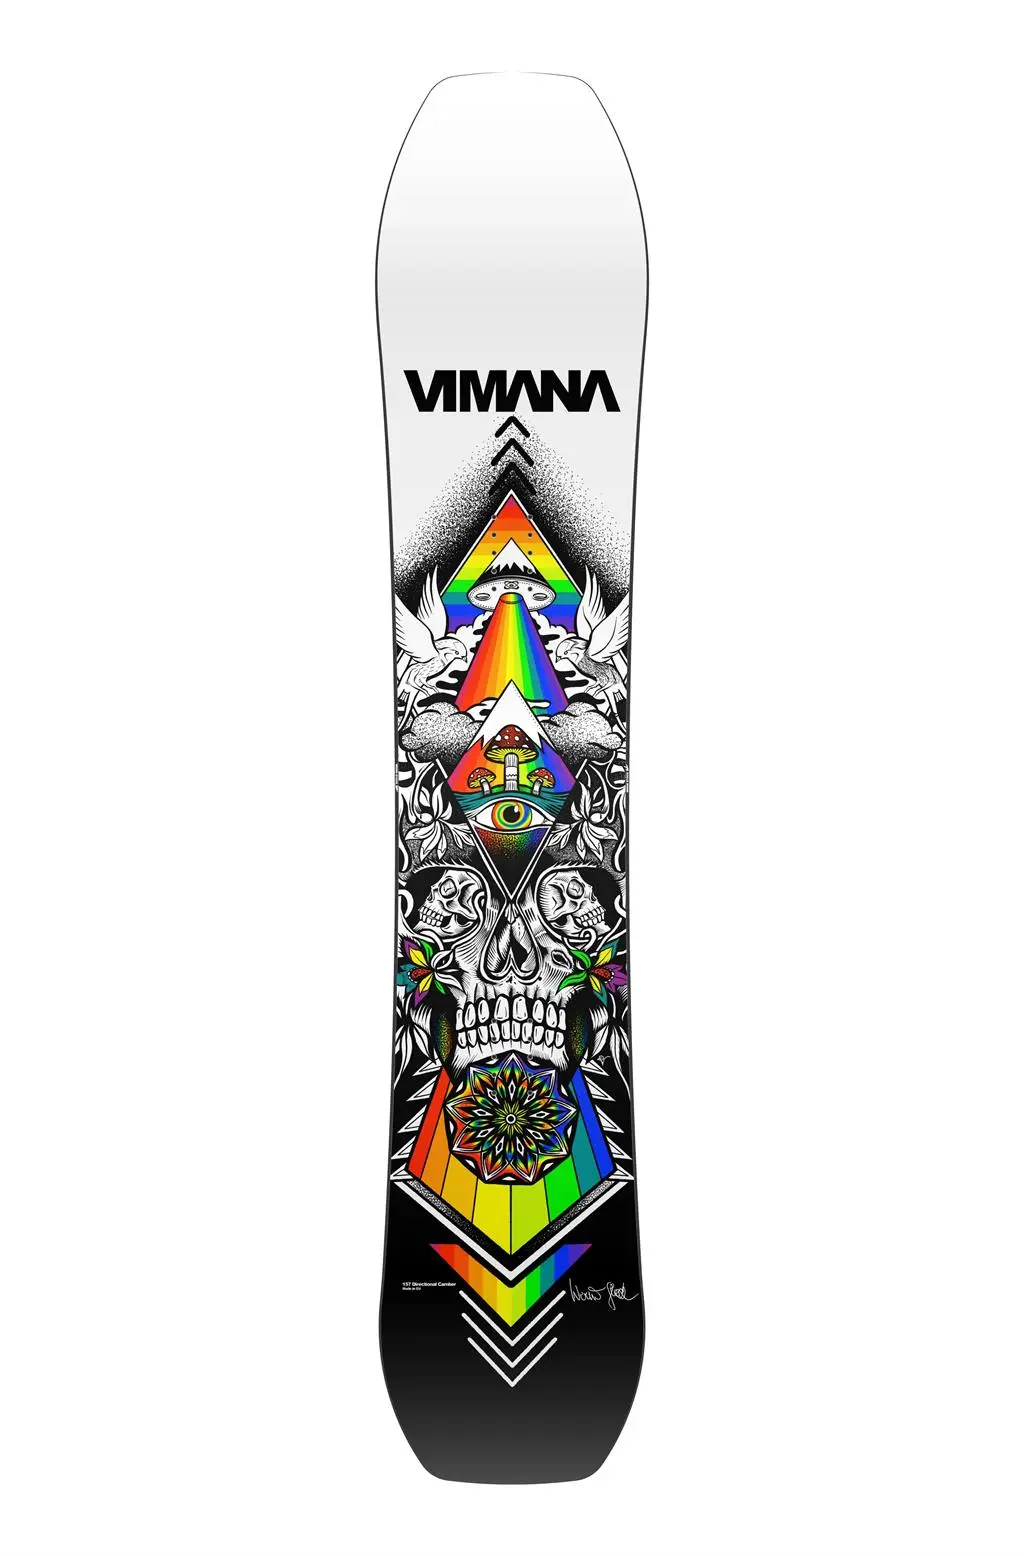 Vimana The Werni Stock freestyle snowboard